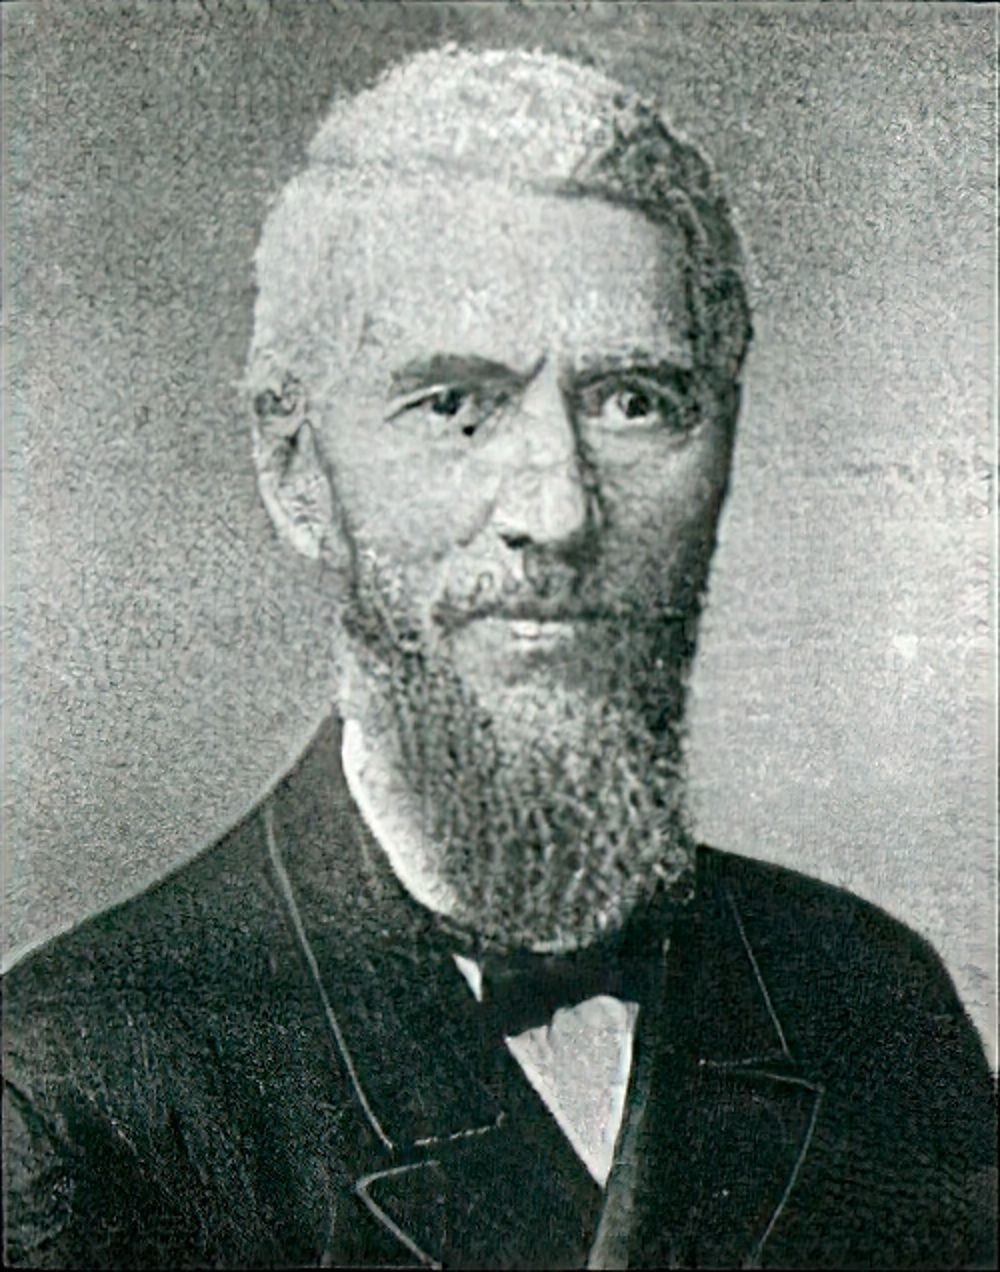 Barton W. Johnson